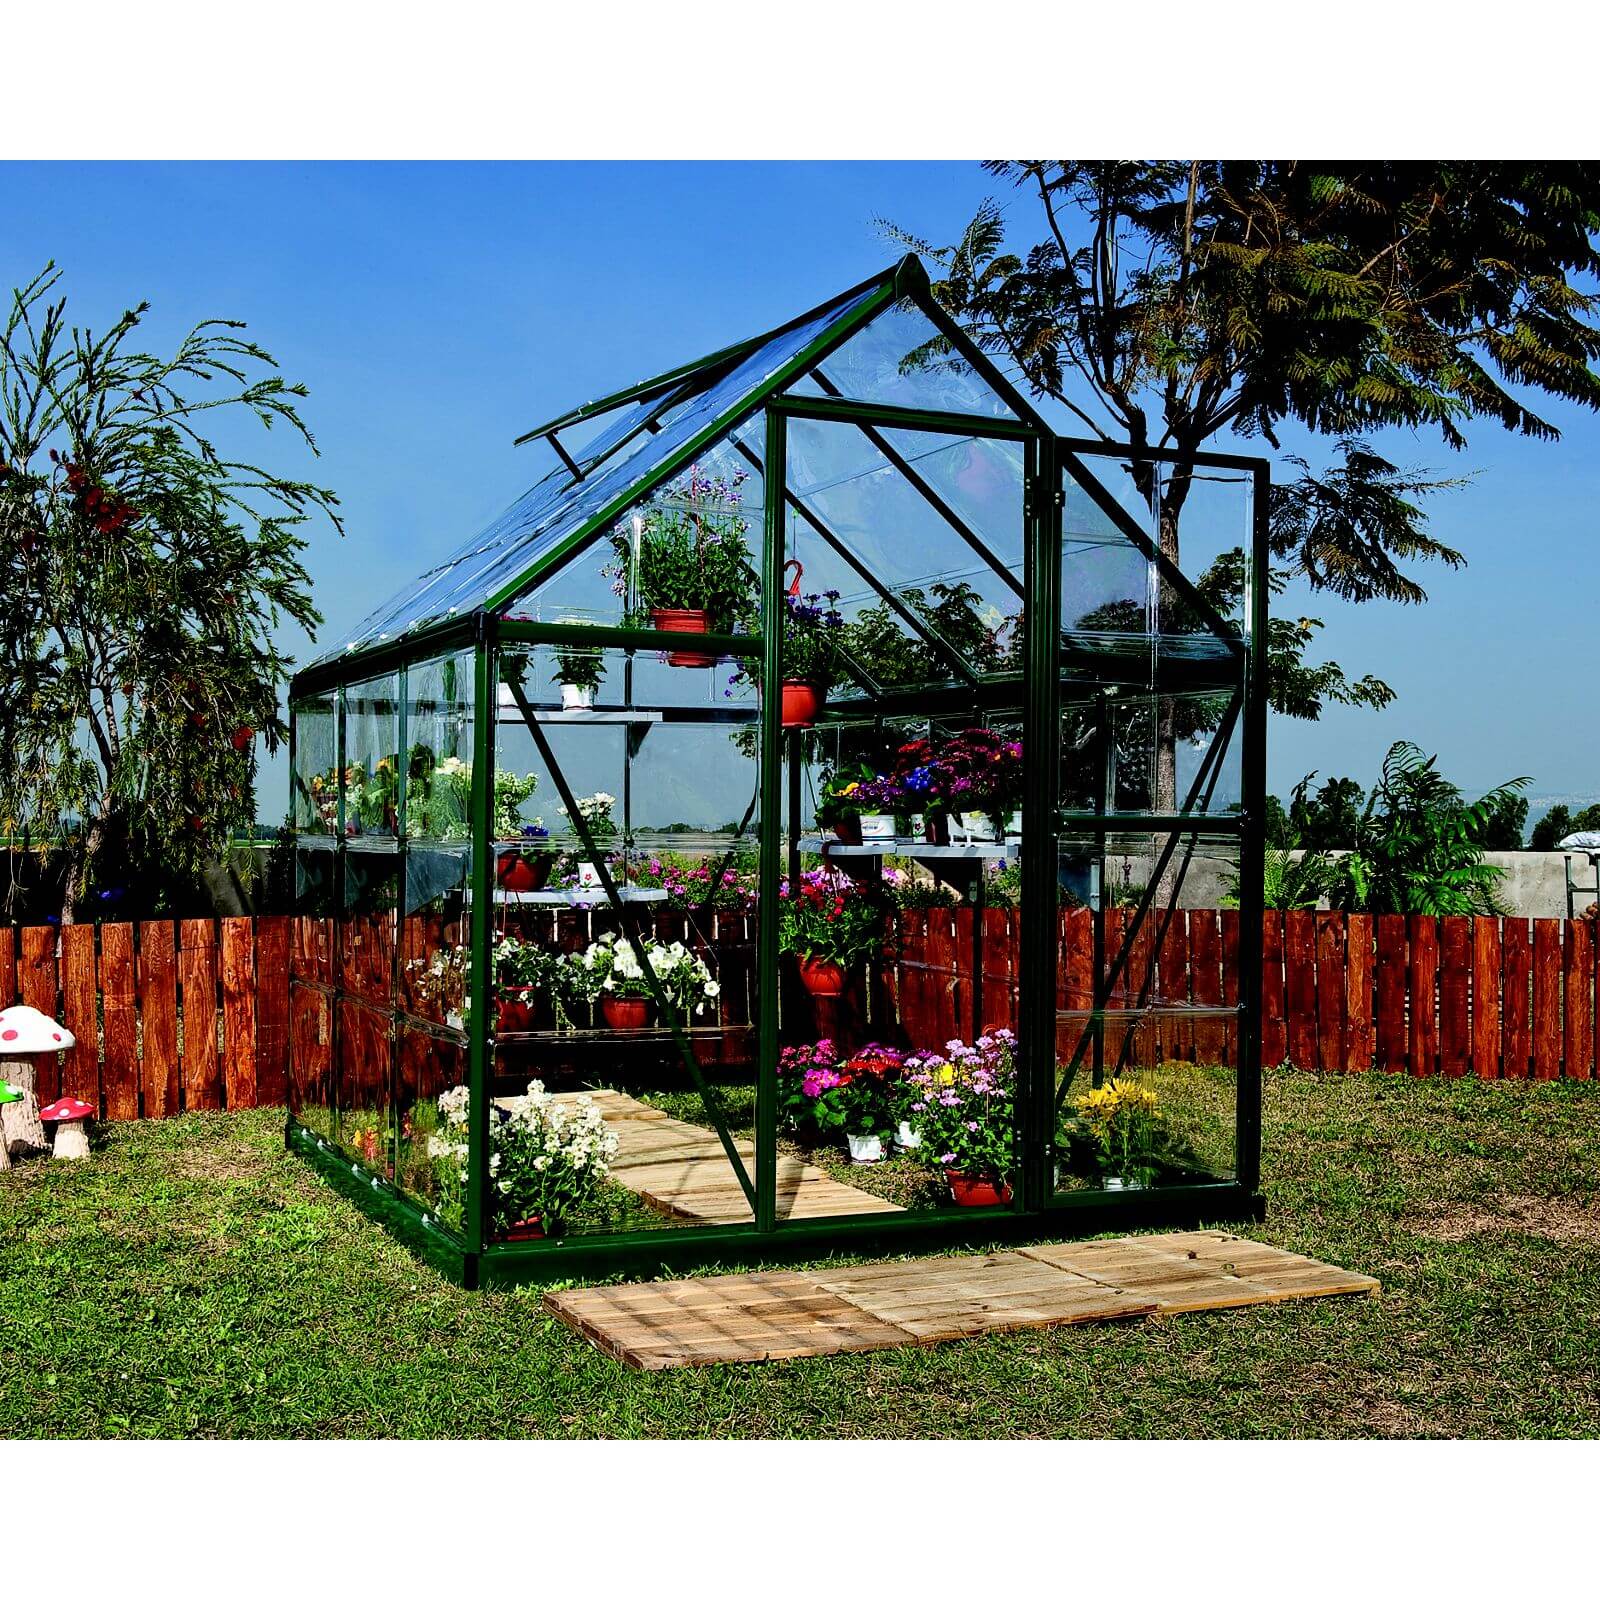 Palram 6 x 6ft Canopia Harmony Greenhouse - Green